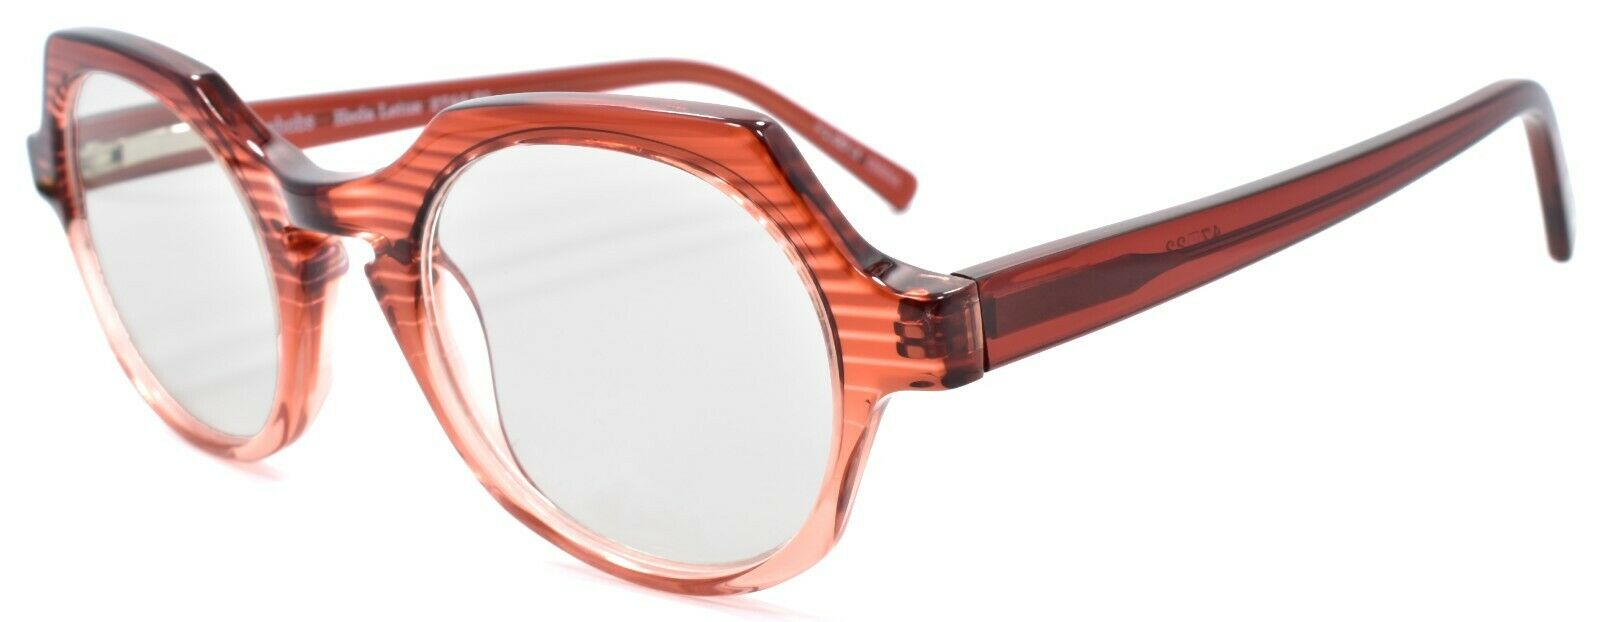 1-Eyebobs Heda Letus 2744 01 Women's Reading Glasses Red / Pink Stripes +2.50-842754159753-IKSpecs